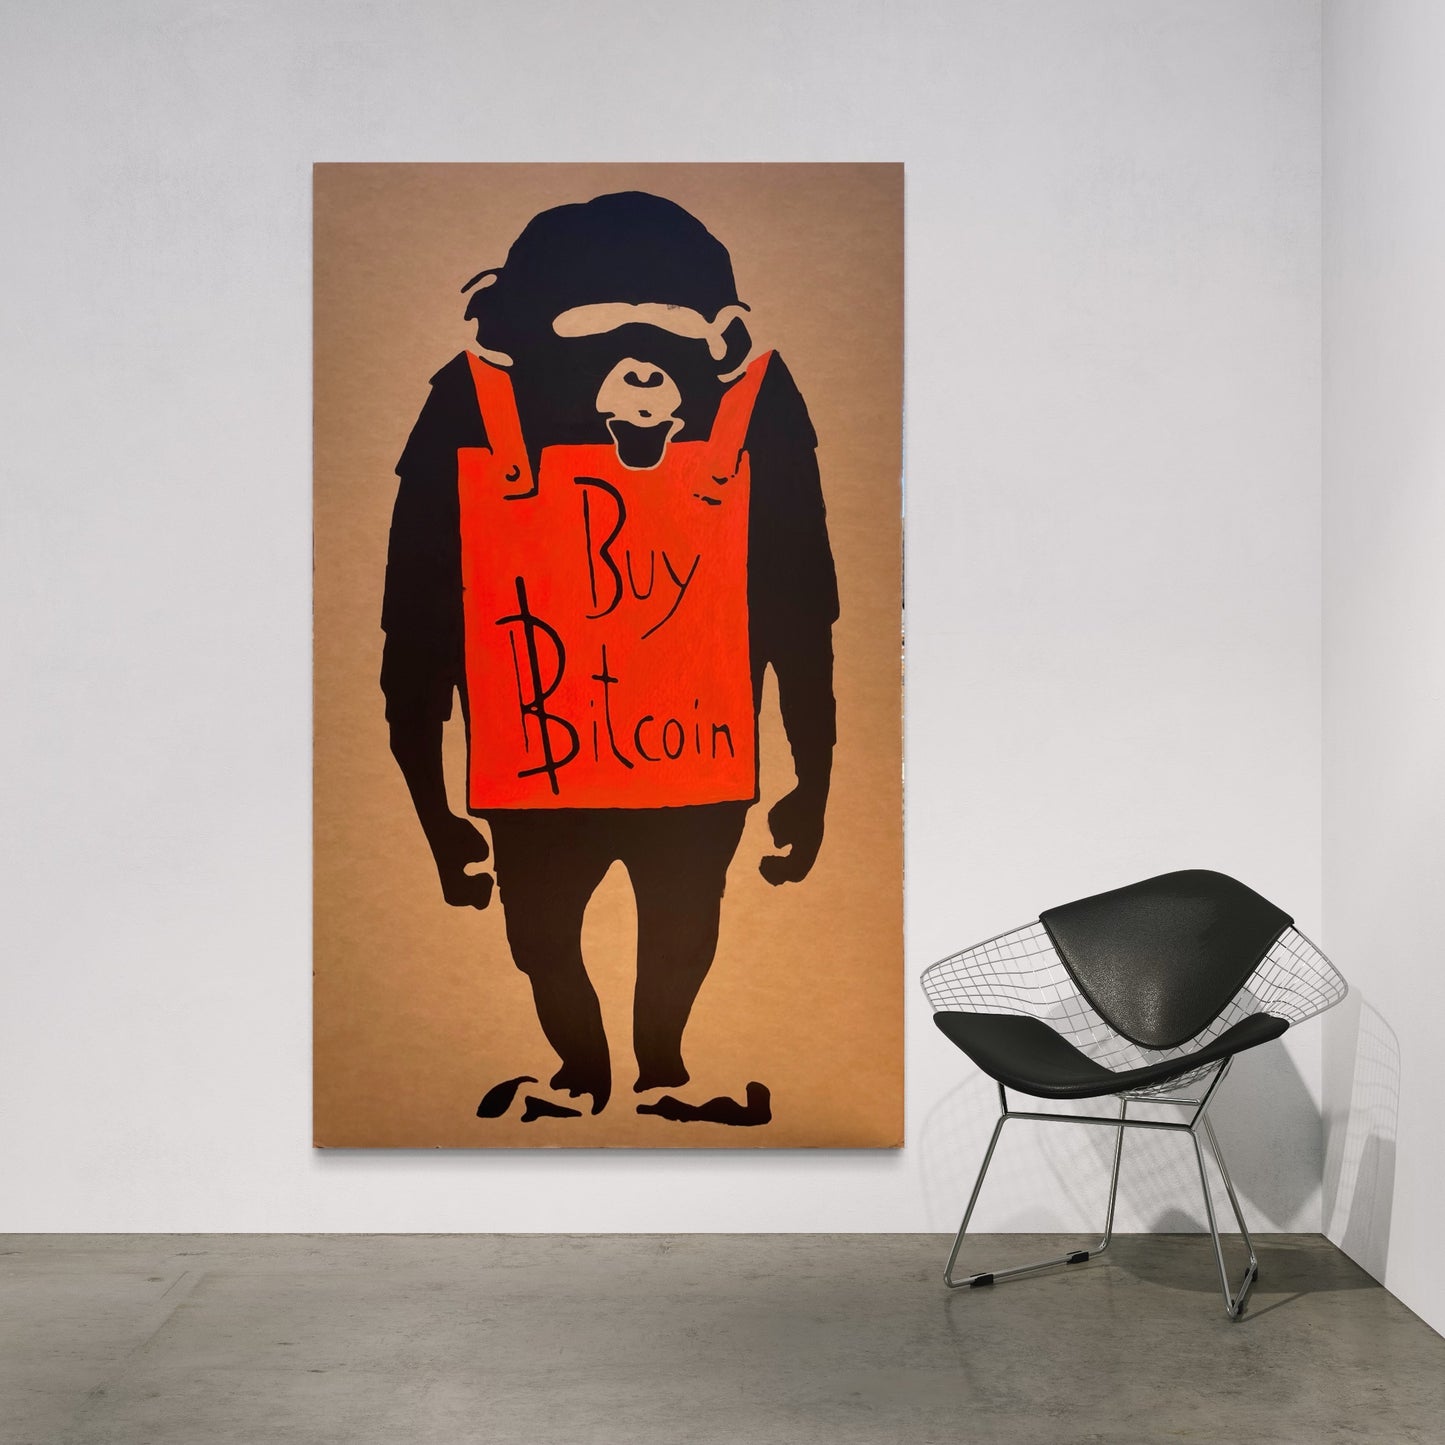 Acrylic Paint Cardboard Wall "Buy Bitcoin Monkey"